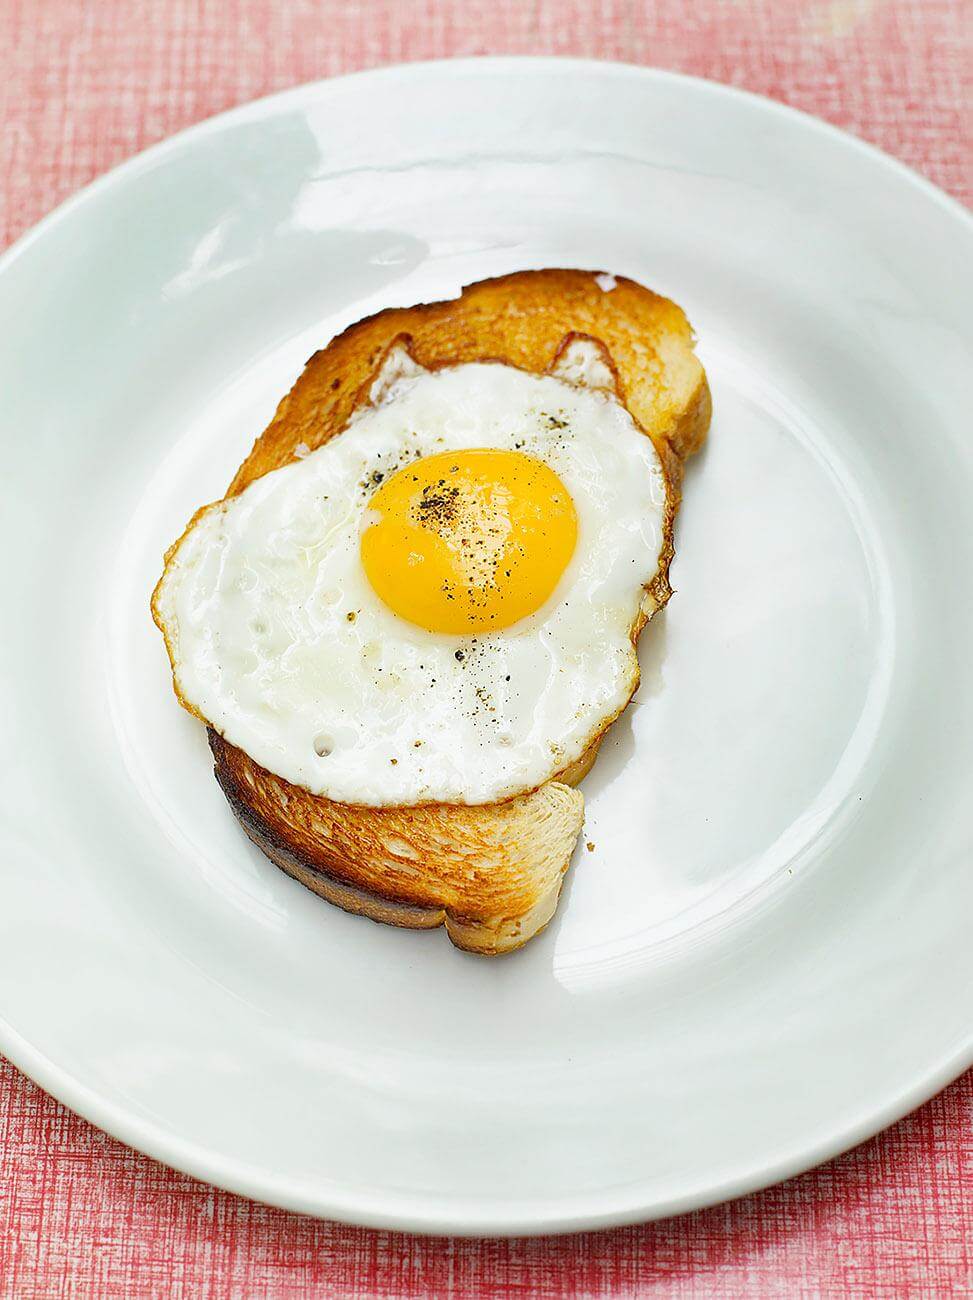 Eggs up. Санни Сайд ап яичница. Яичница для завтрака. Красивая яичница. Необычный завтрак из яиц.